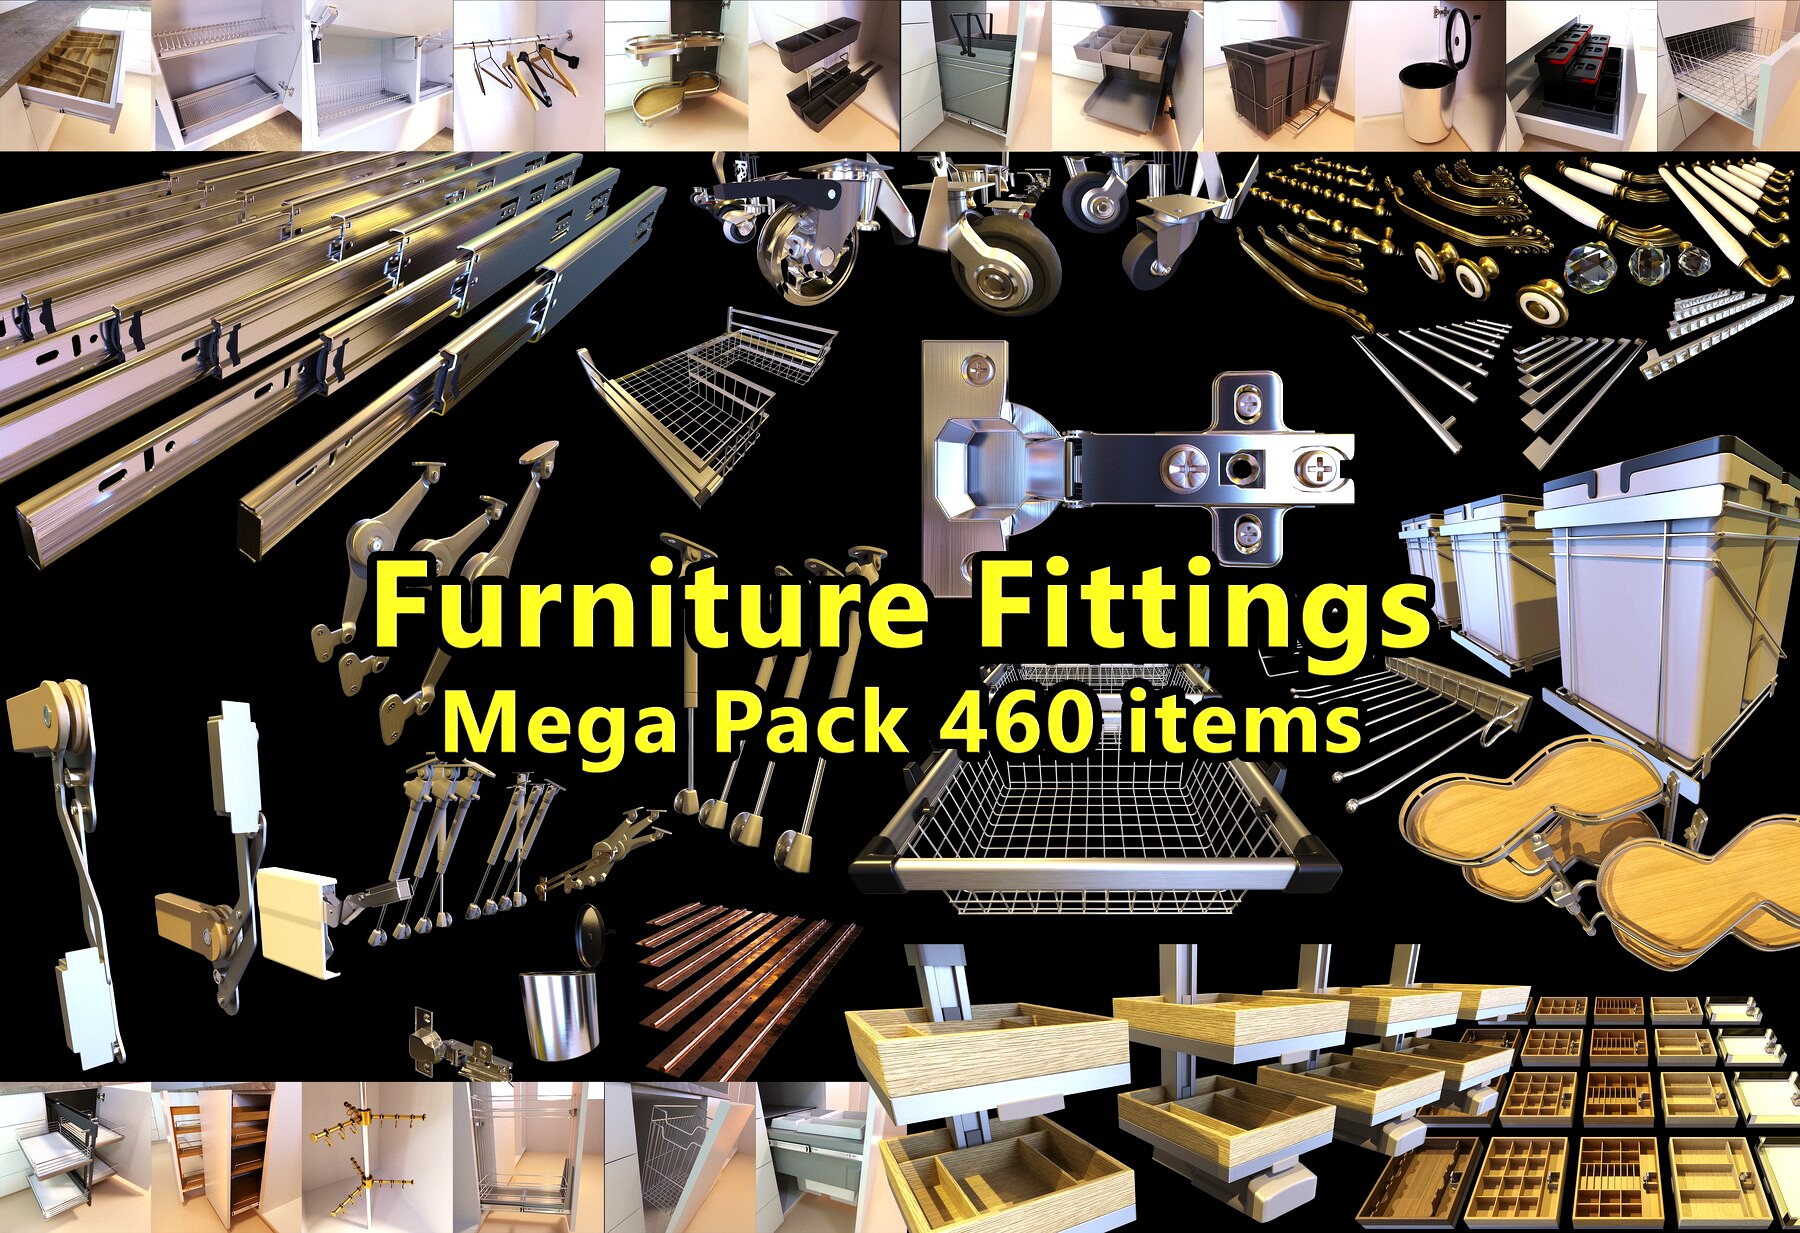 Furniture Fittings Mega Pack 460 items